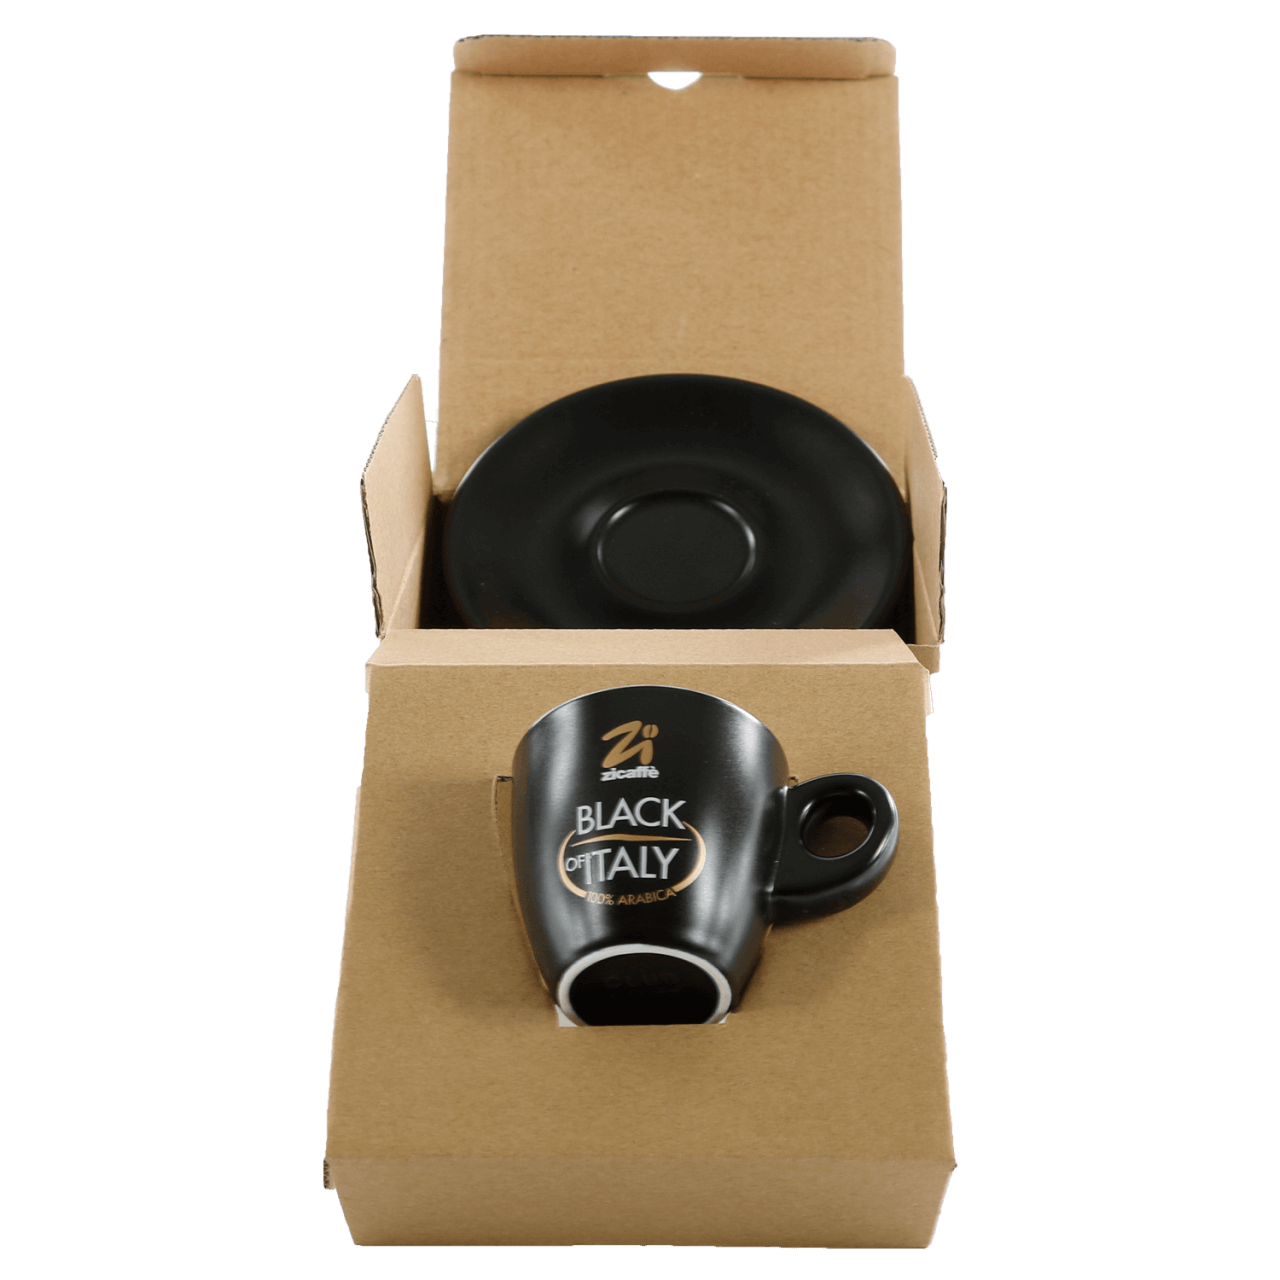 Zicaffe Espressotasse Black of Italy im Karton